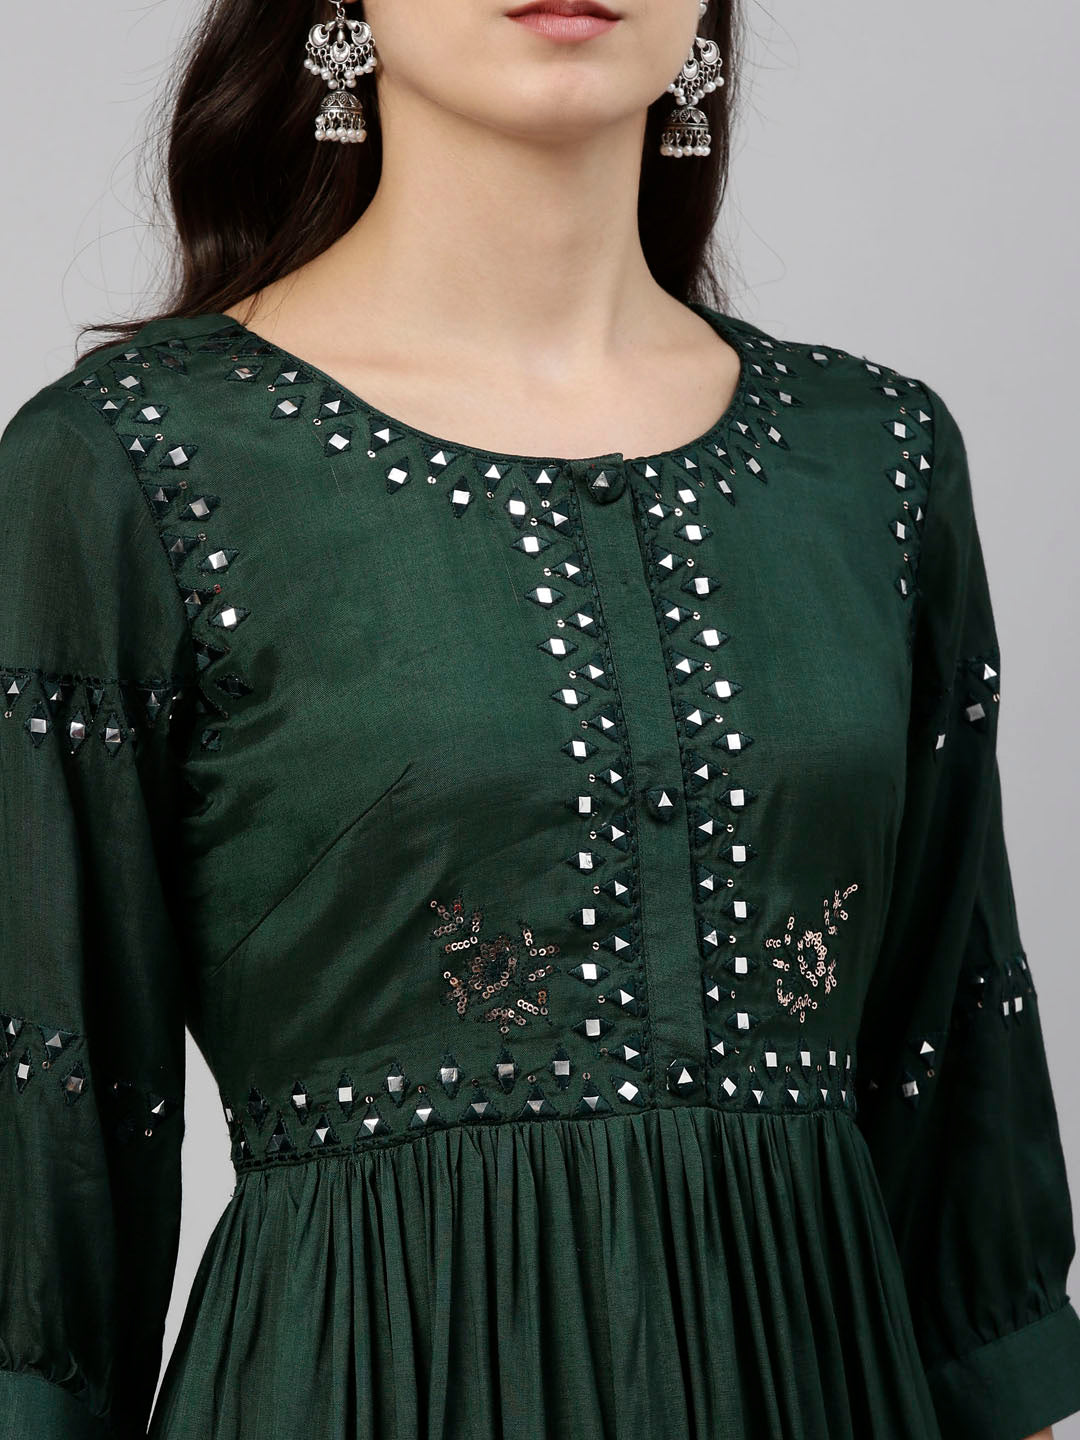 Neeru's Green Color Santoon Fabric Tunic